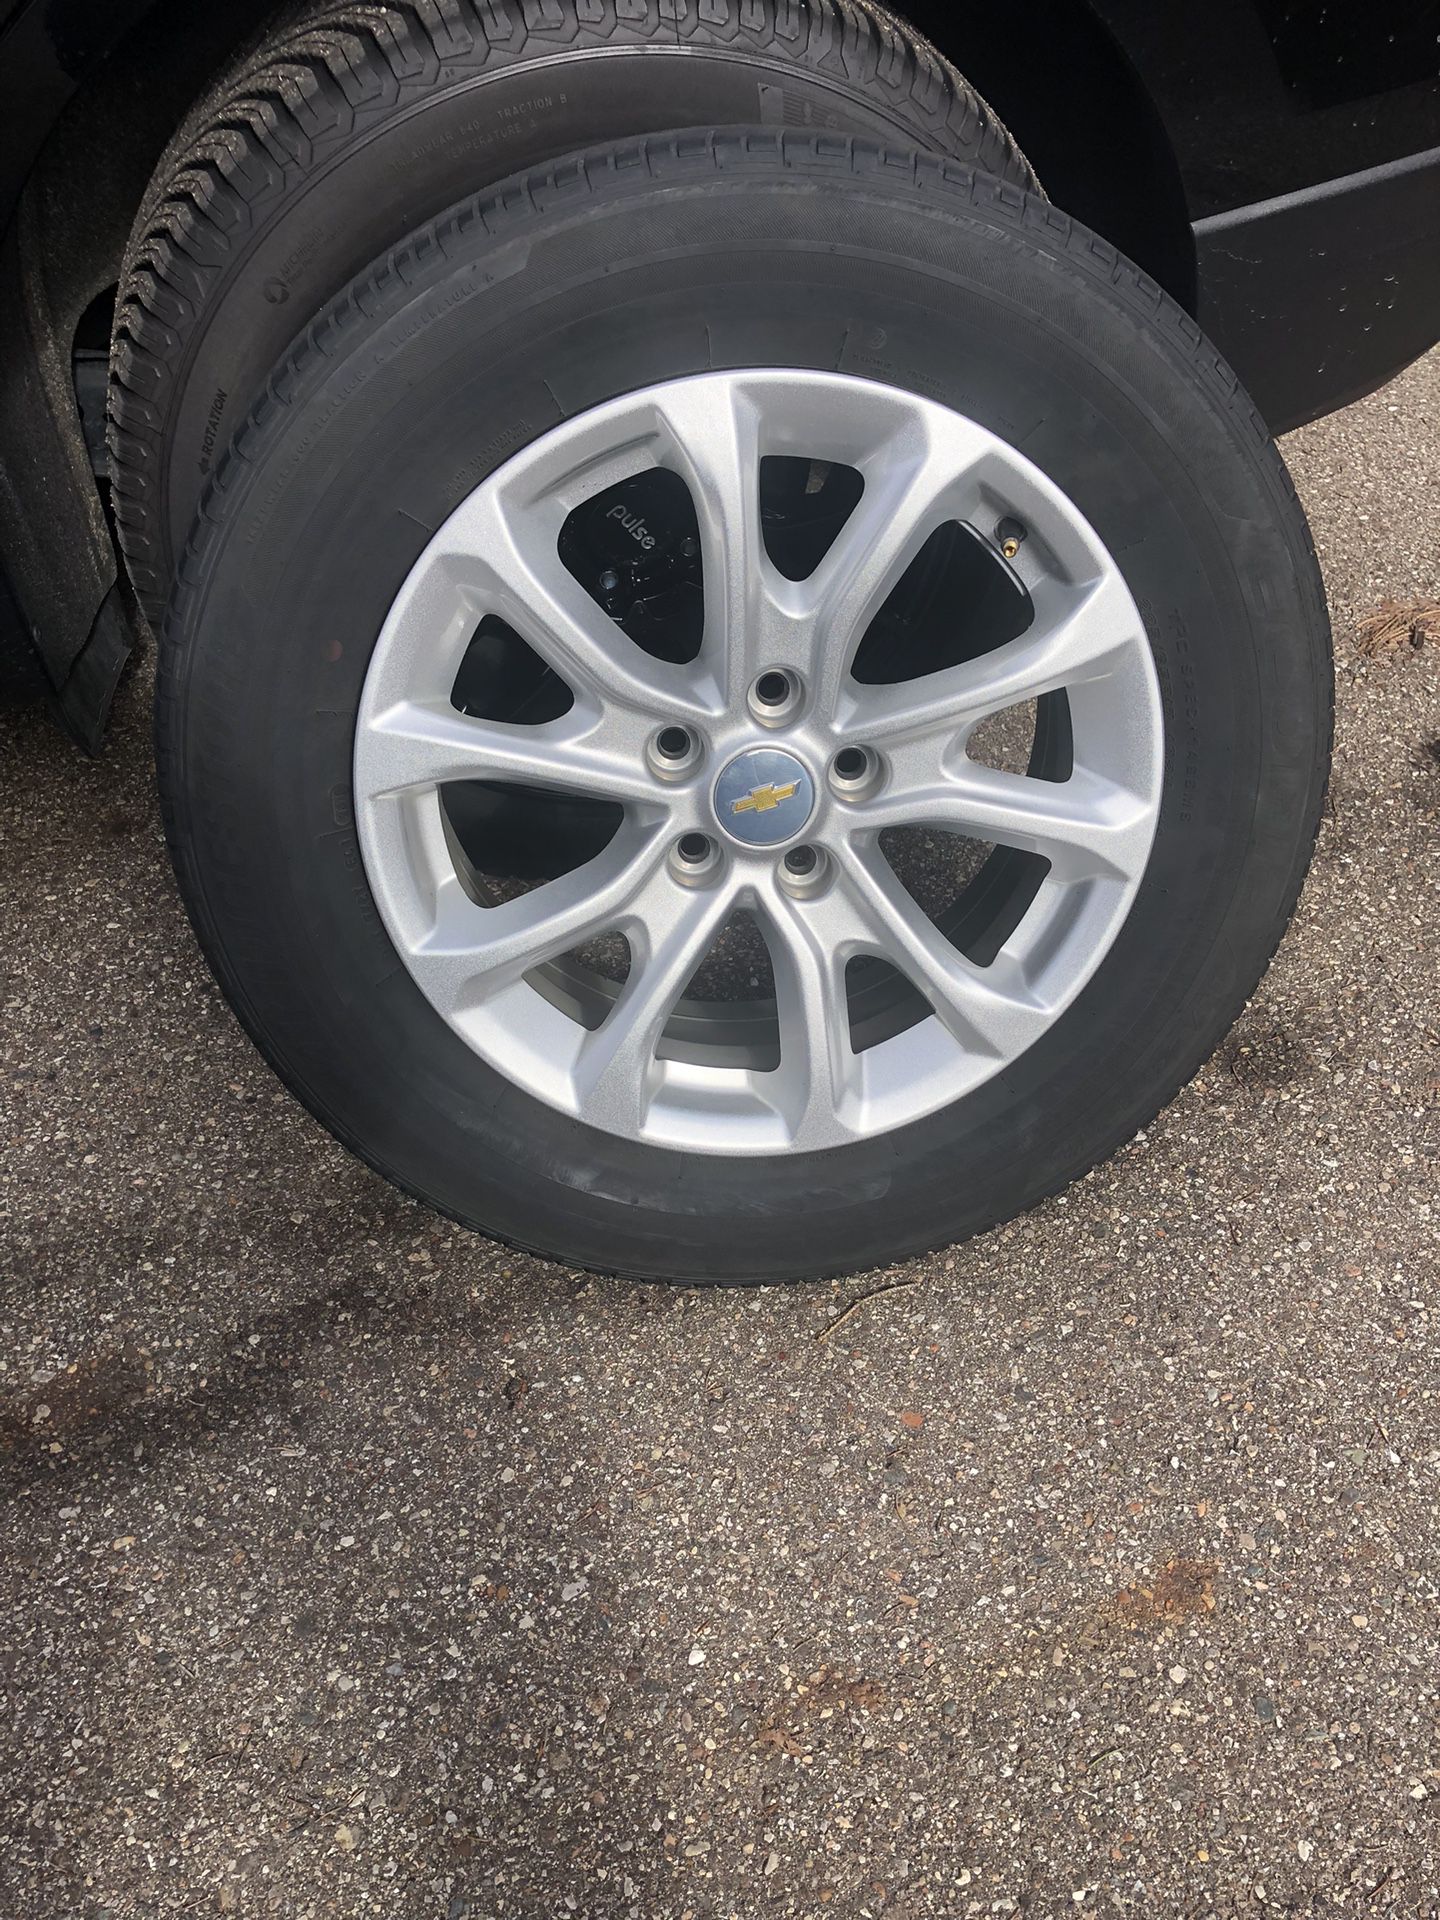 Chevy Equinox Wheels/Tires - $500